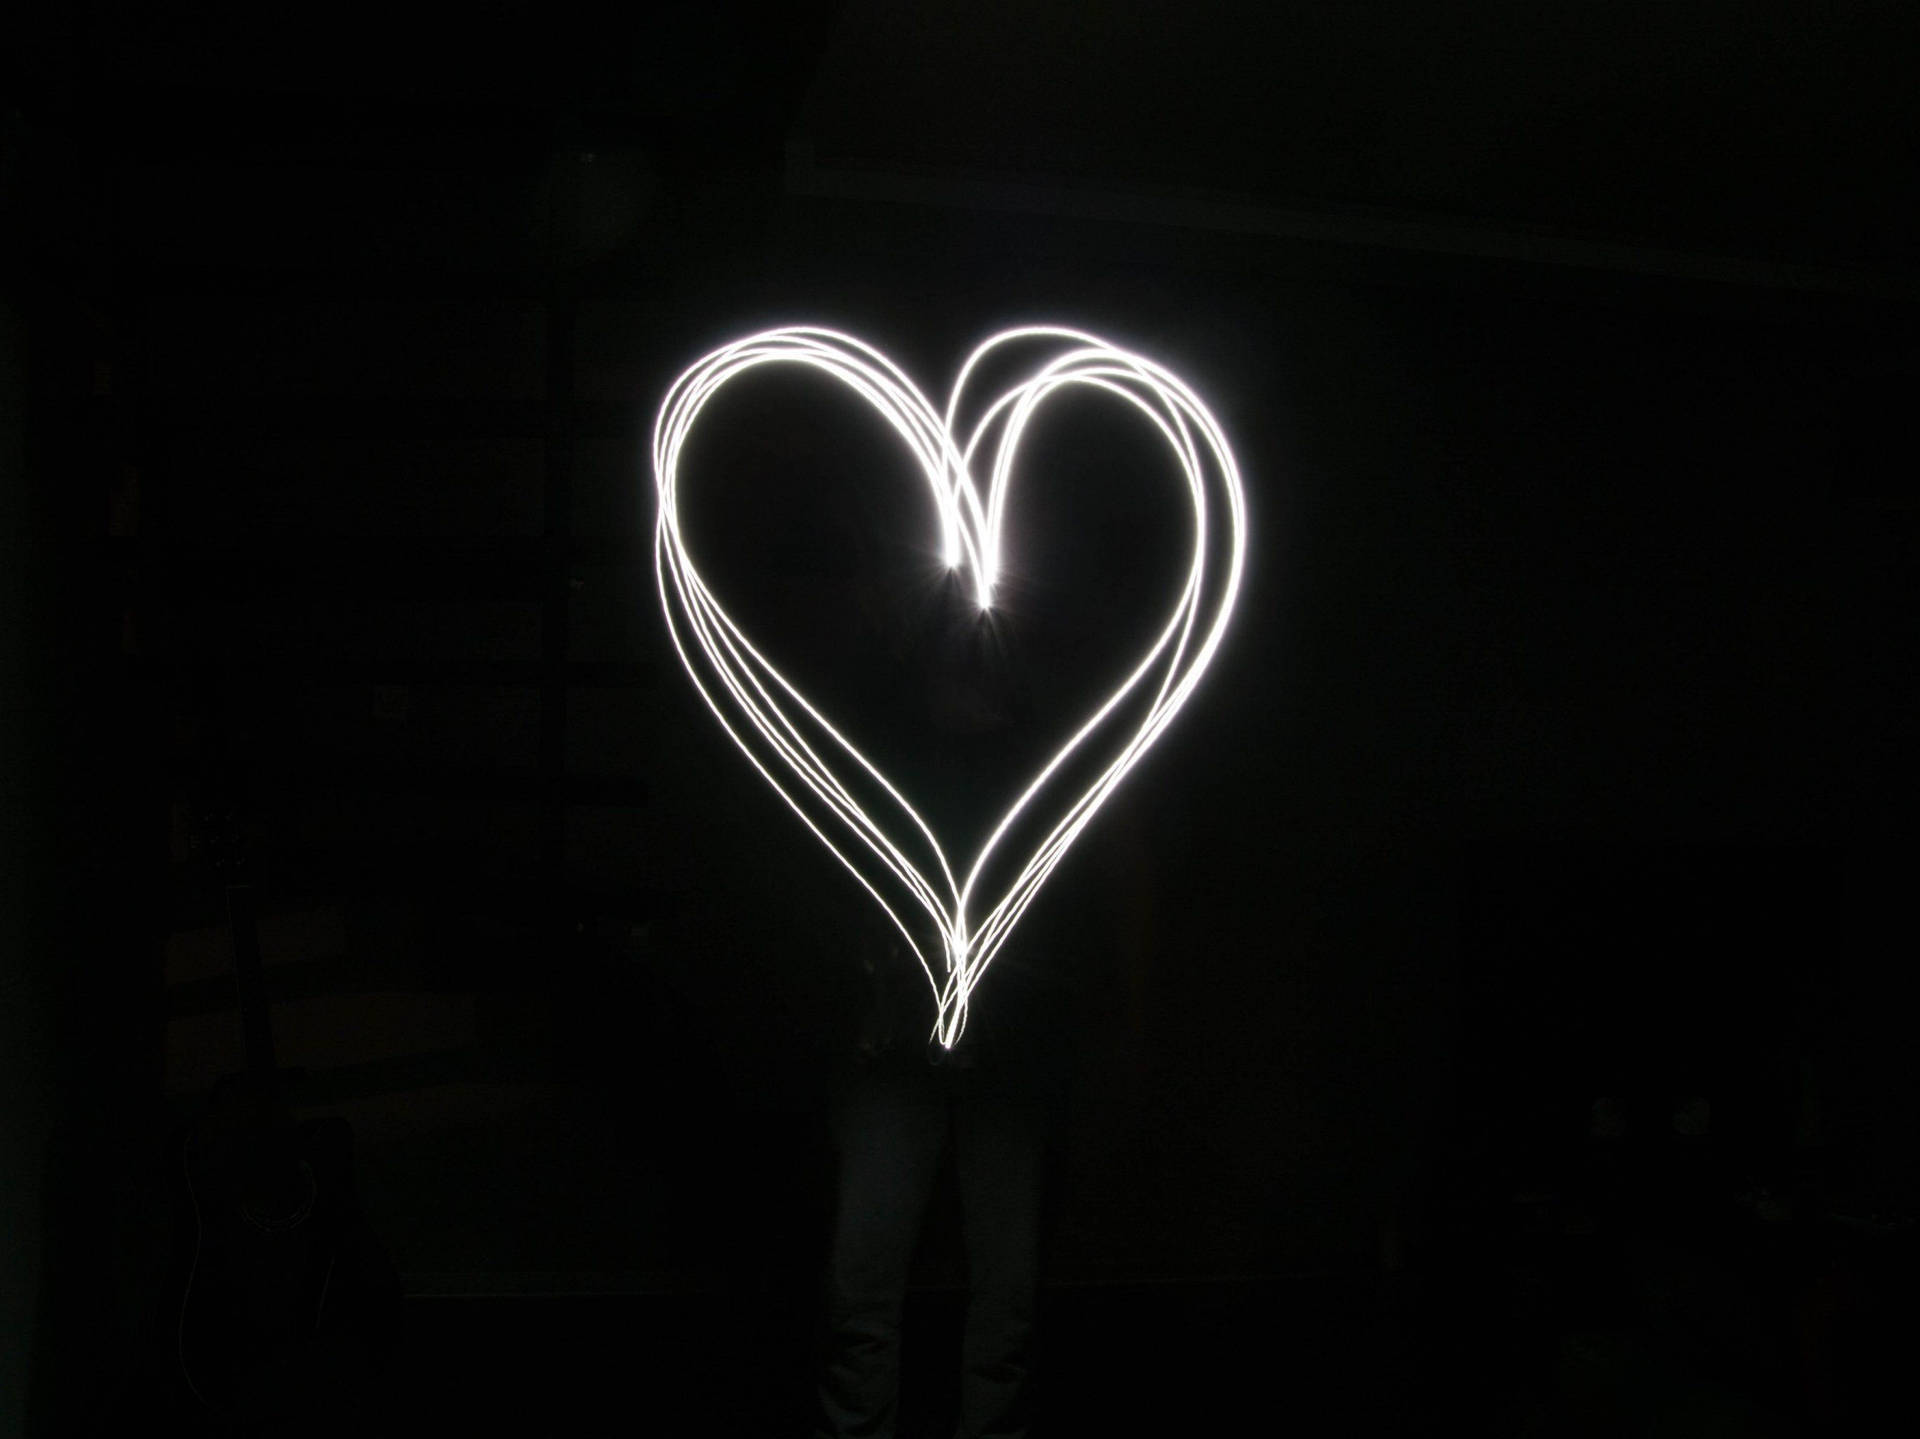 Glowing White Heart Aesthetic Wallpaper